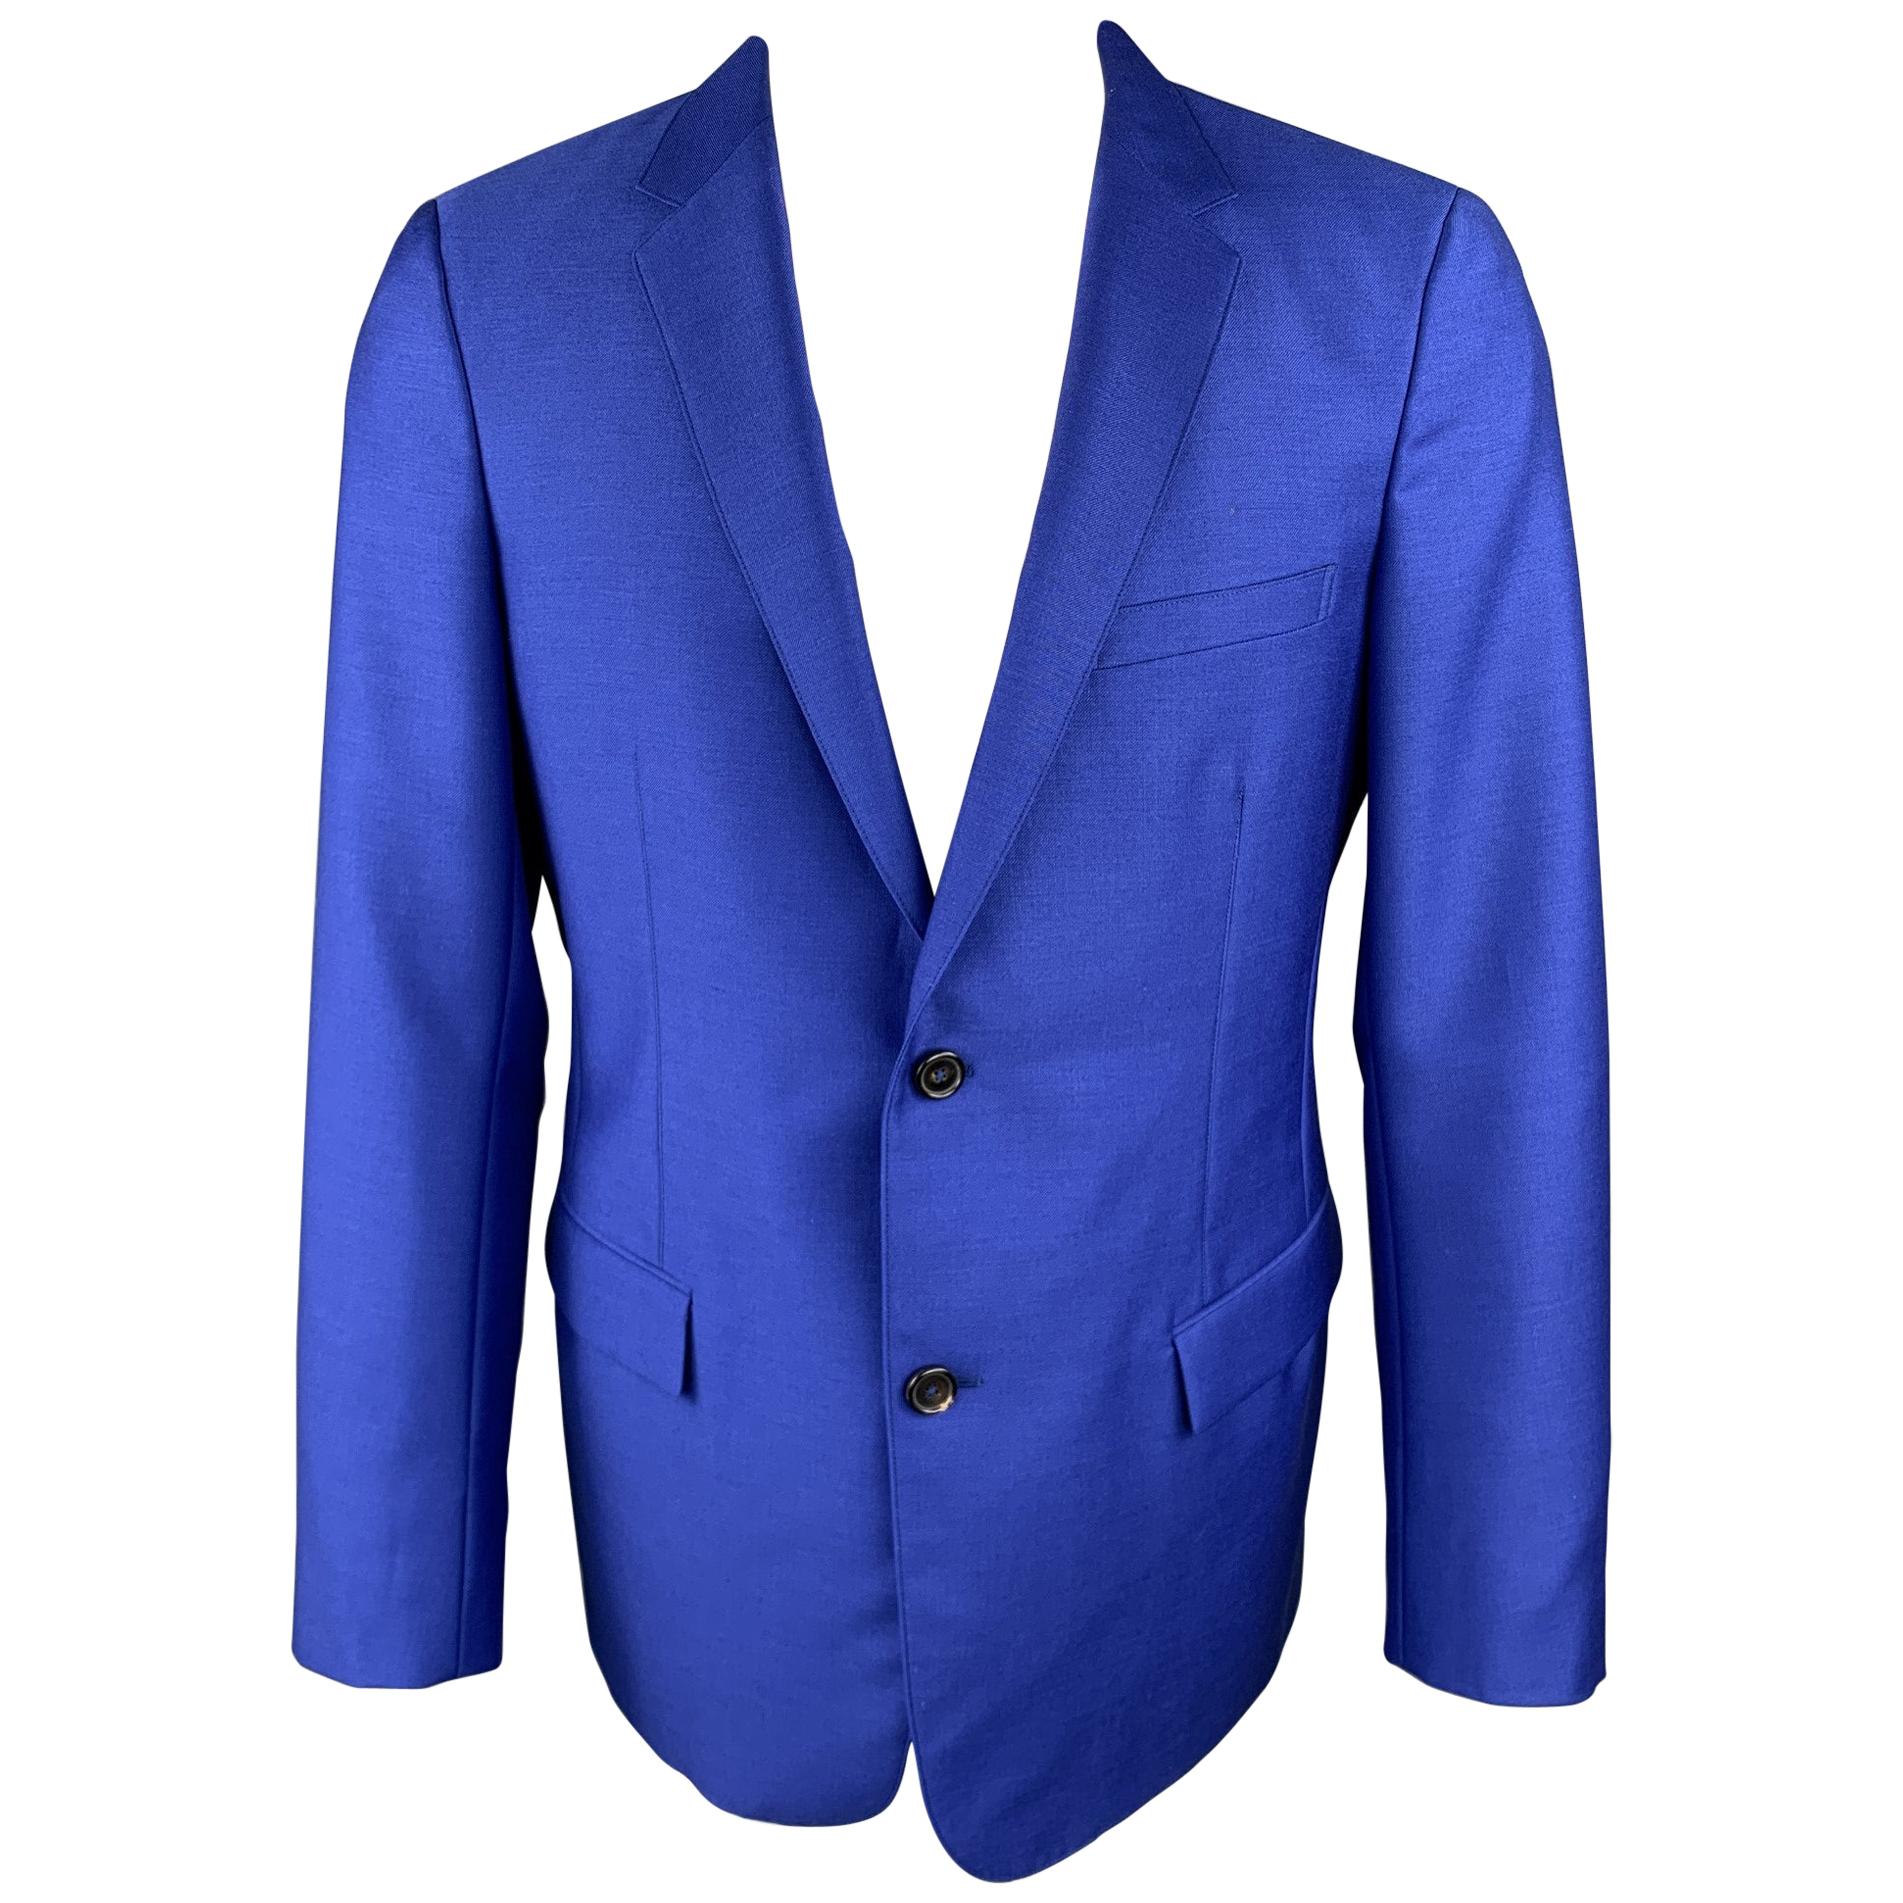 Jil Sander Jil Sander Women's Blazer Size 4 Silk Blend Blue Career 2 Black Buttons Italy 